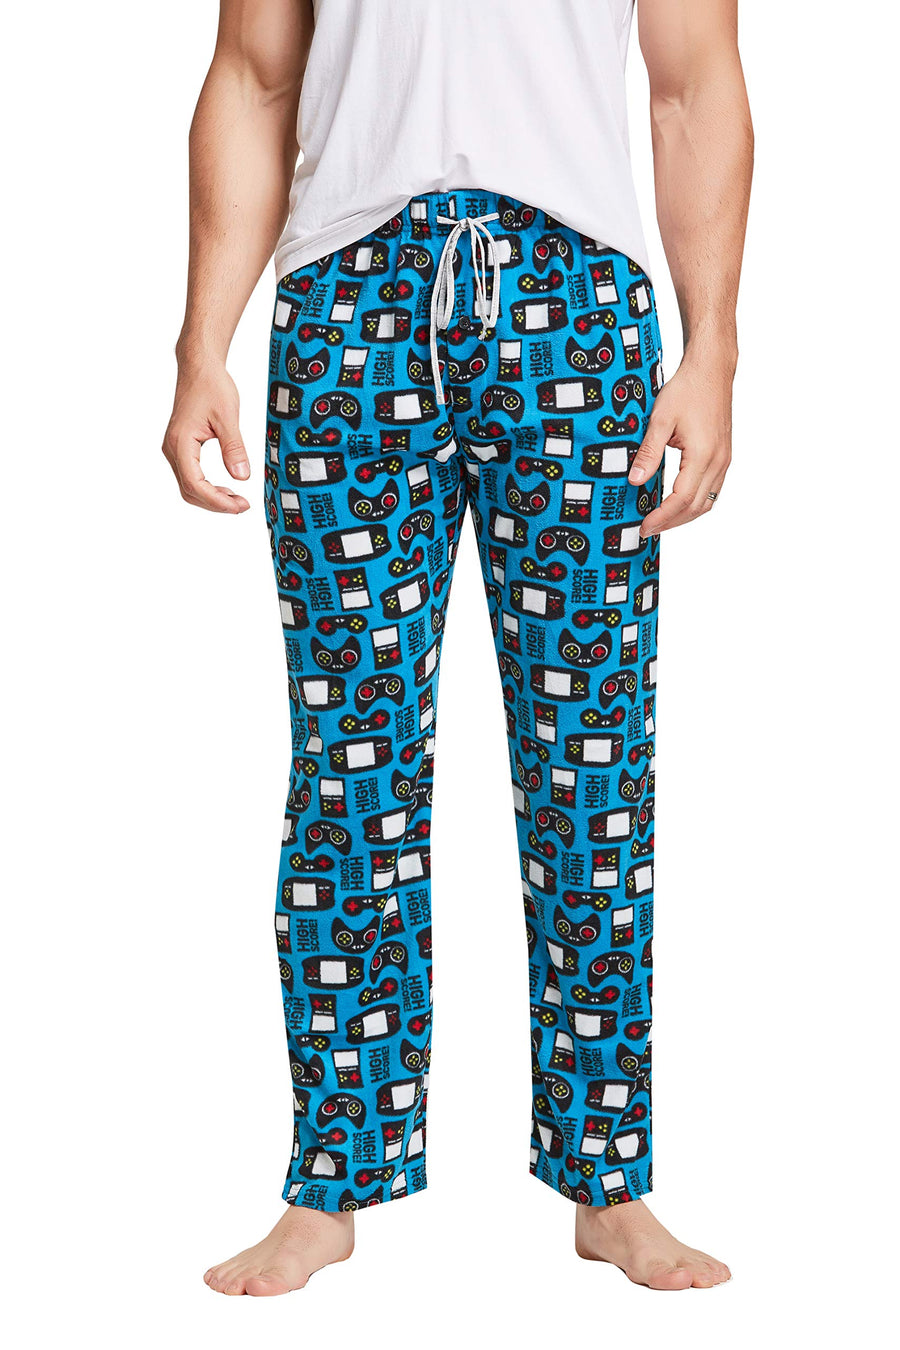 CYZ Men's Fleece Pajama Pant